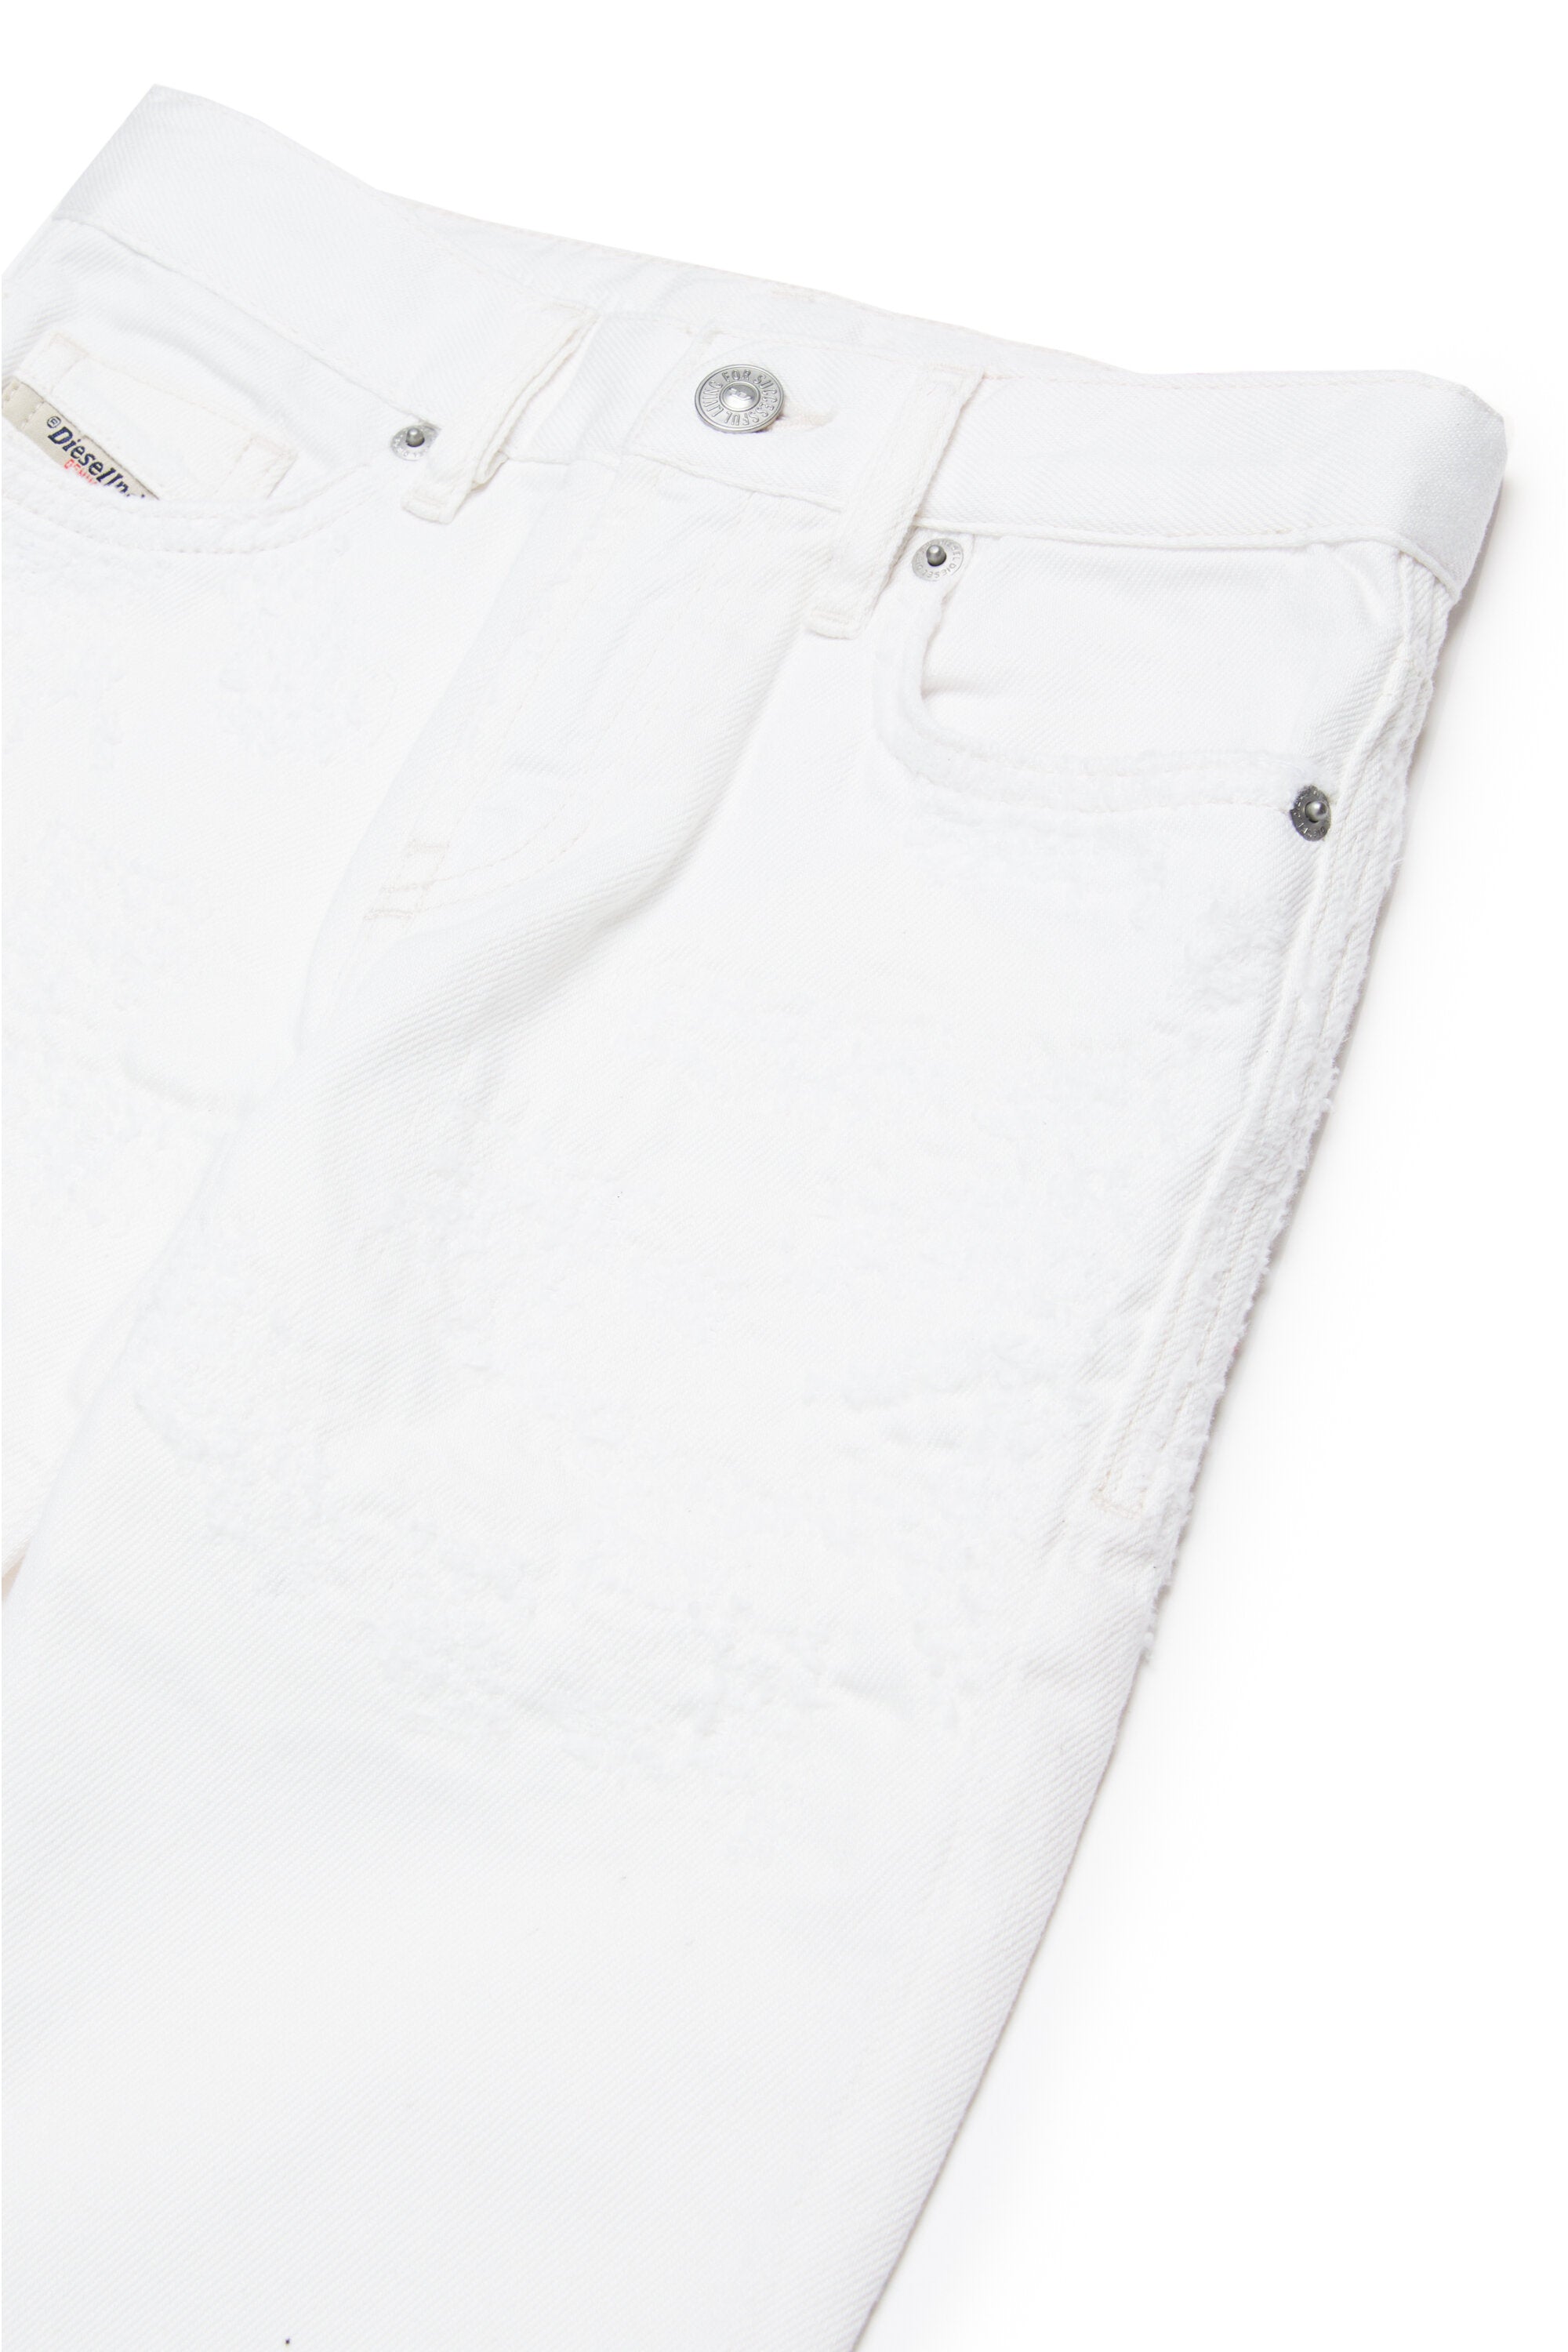 Jeans straight bianco con abrasioni - 2020 D-Viker